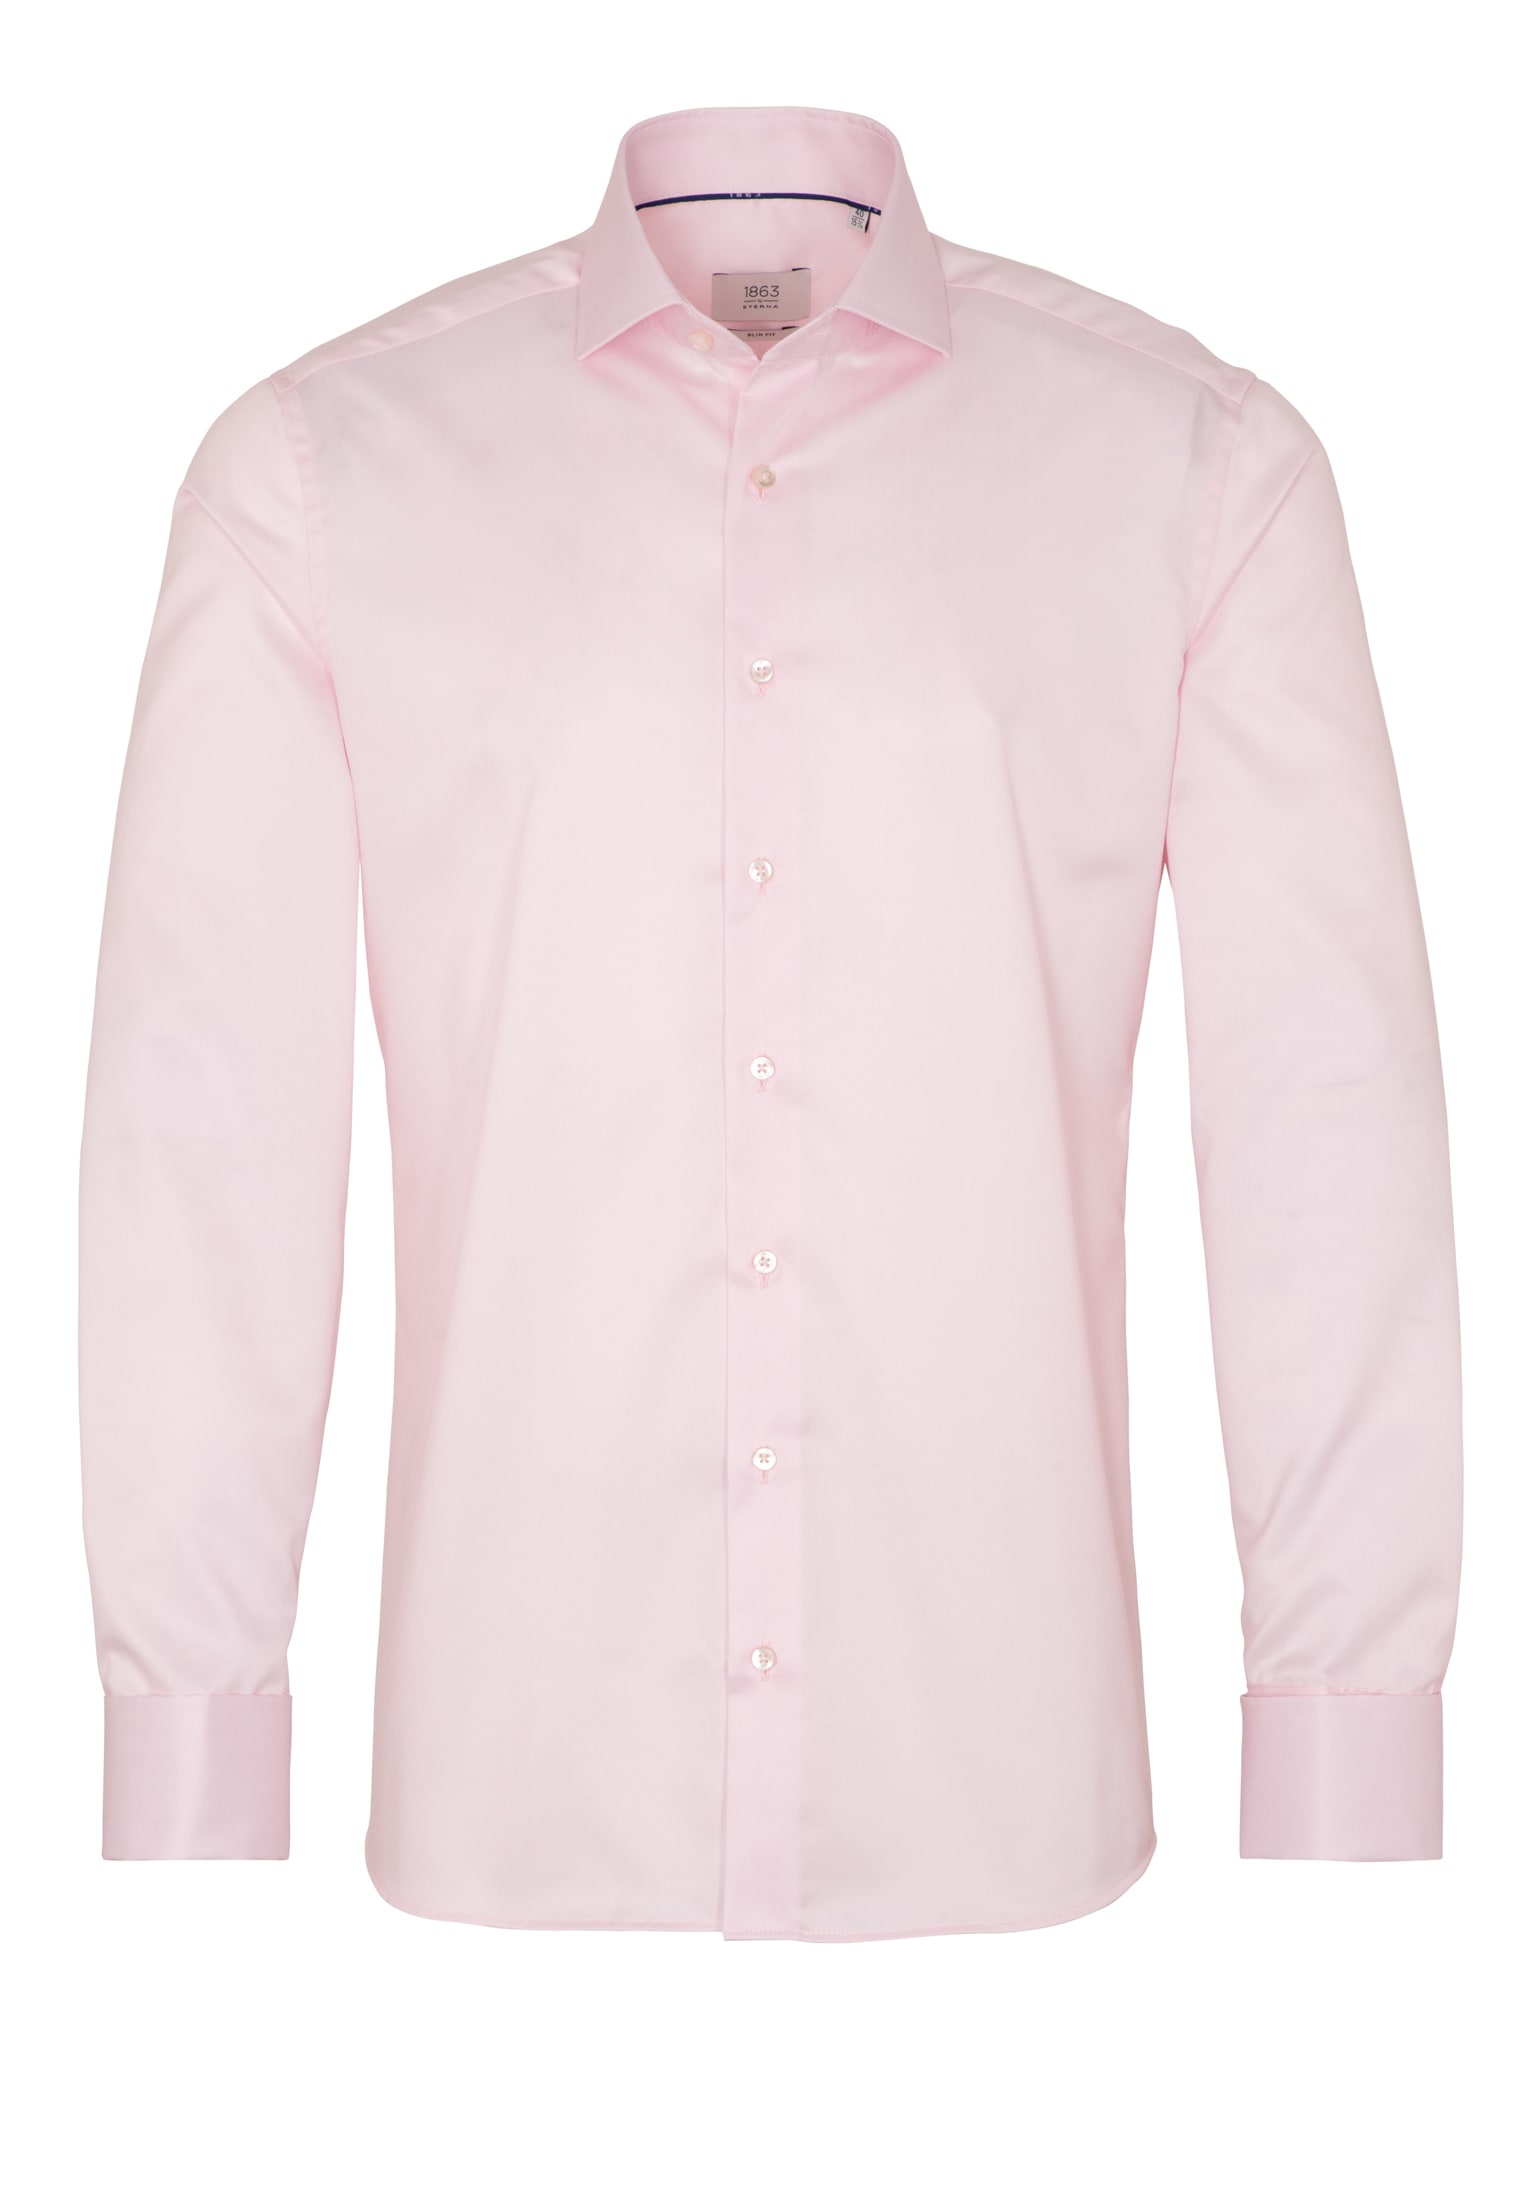 SLIM FIT Luxury Shirt in soft pink unifarben